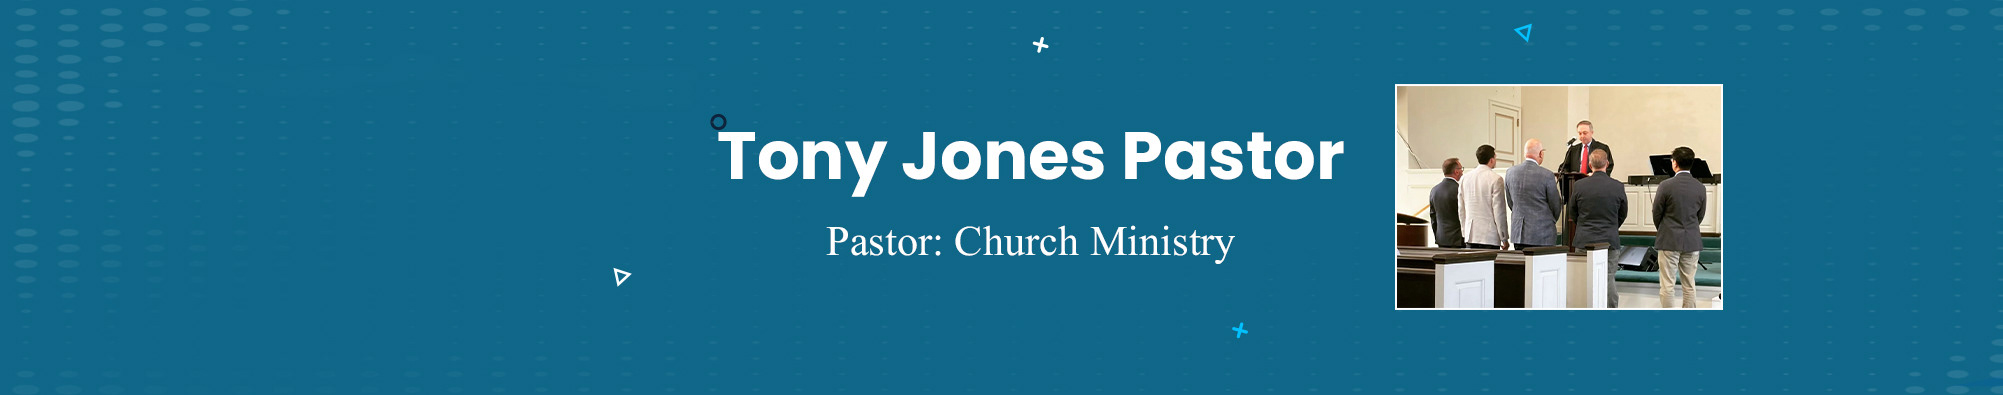 Tony Jones Pastor's profile banner